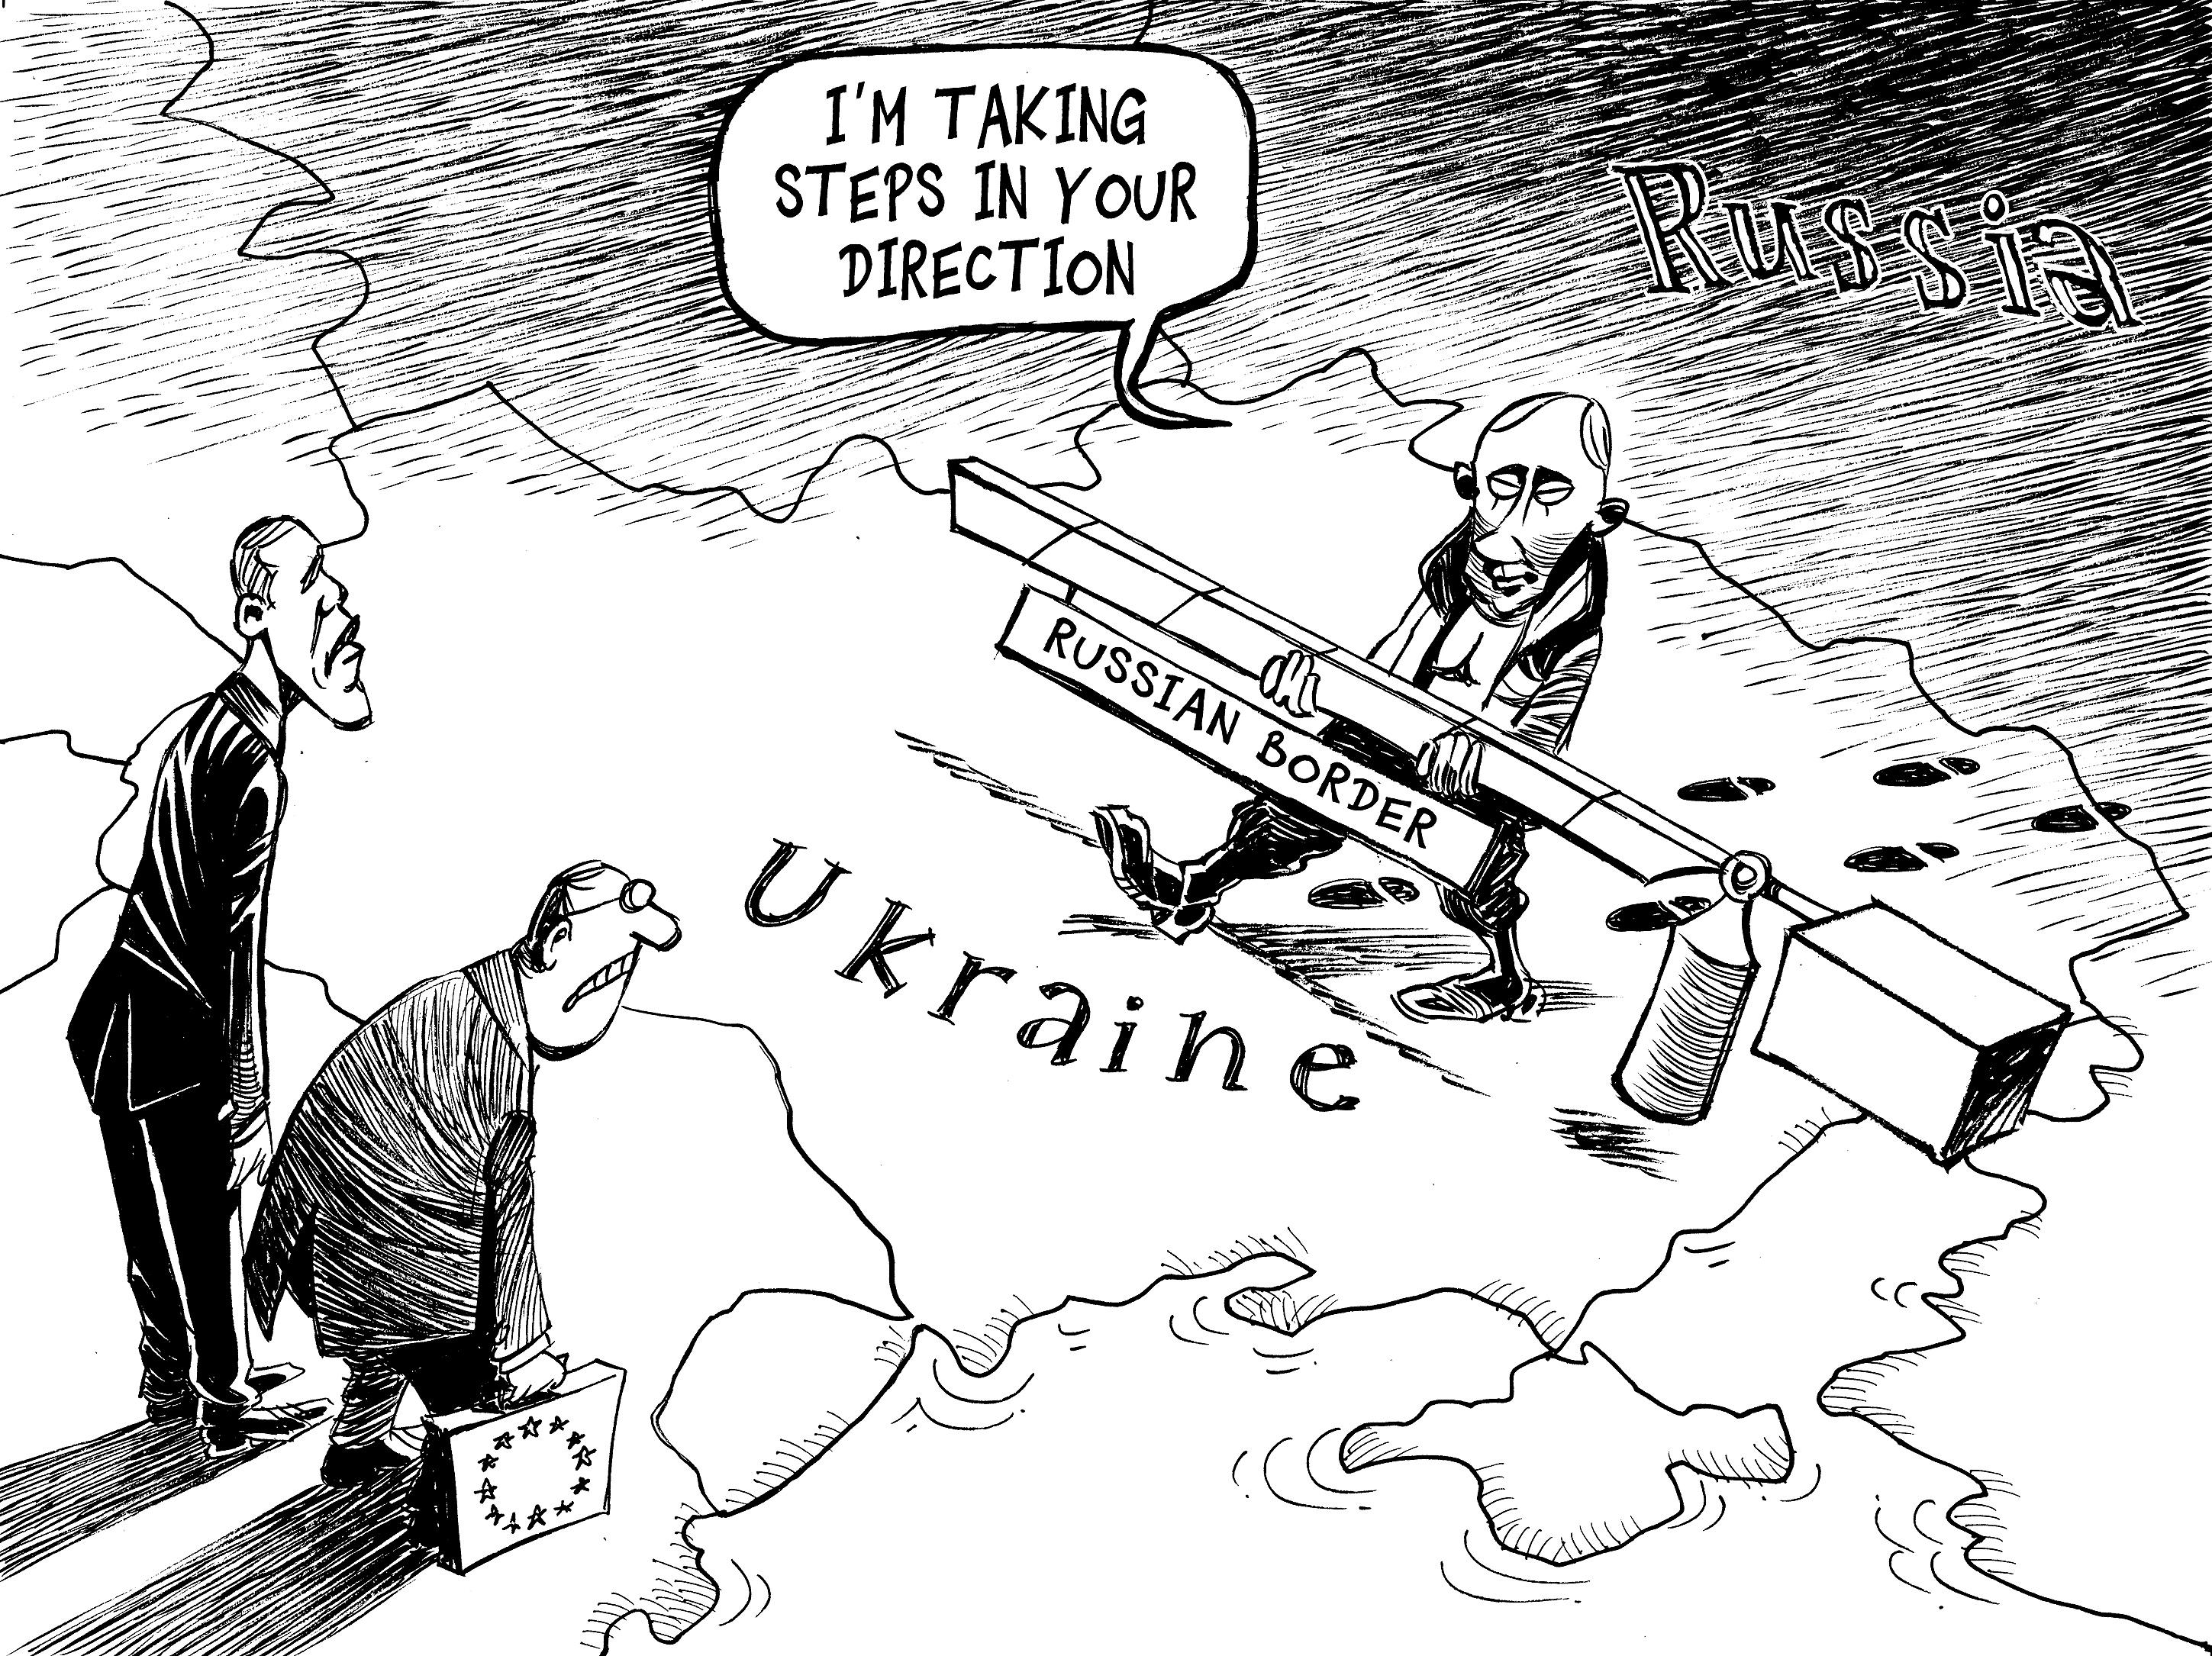 Fighting goes on in Ukraine